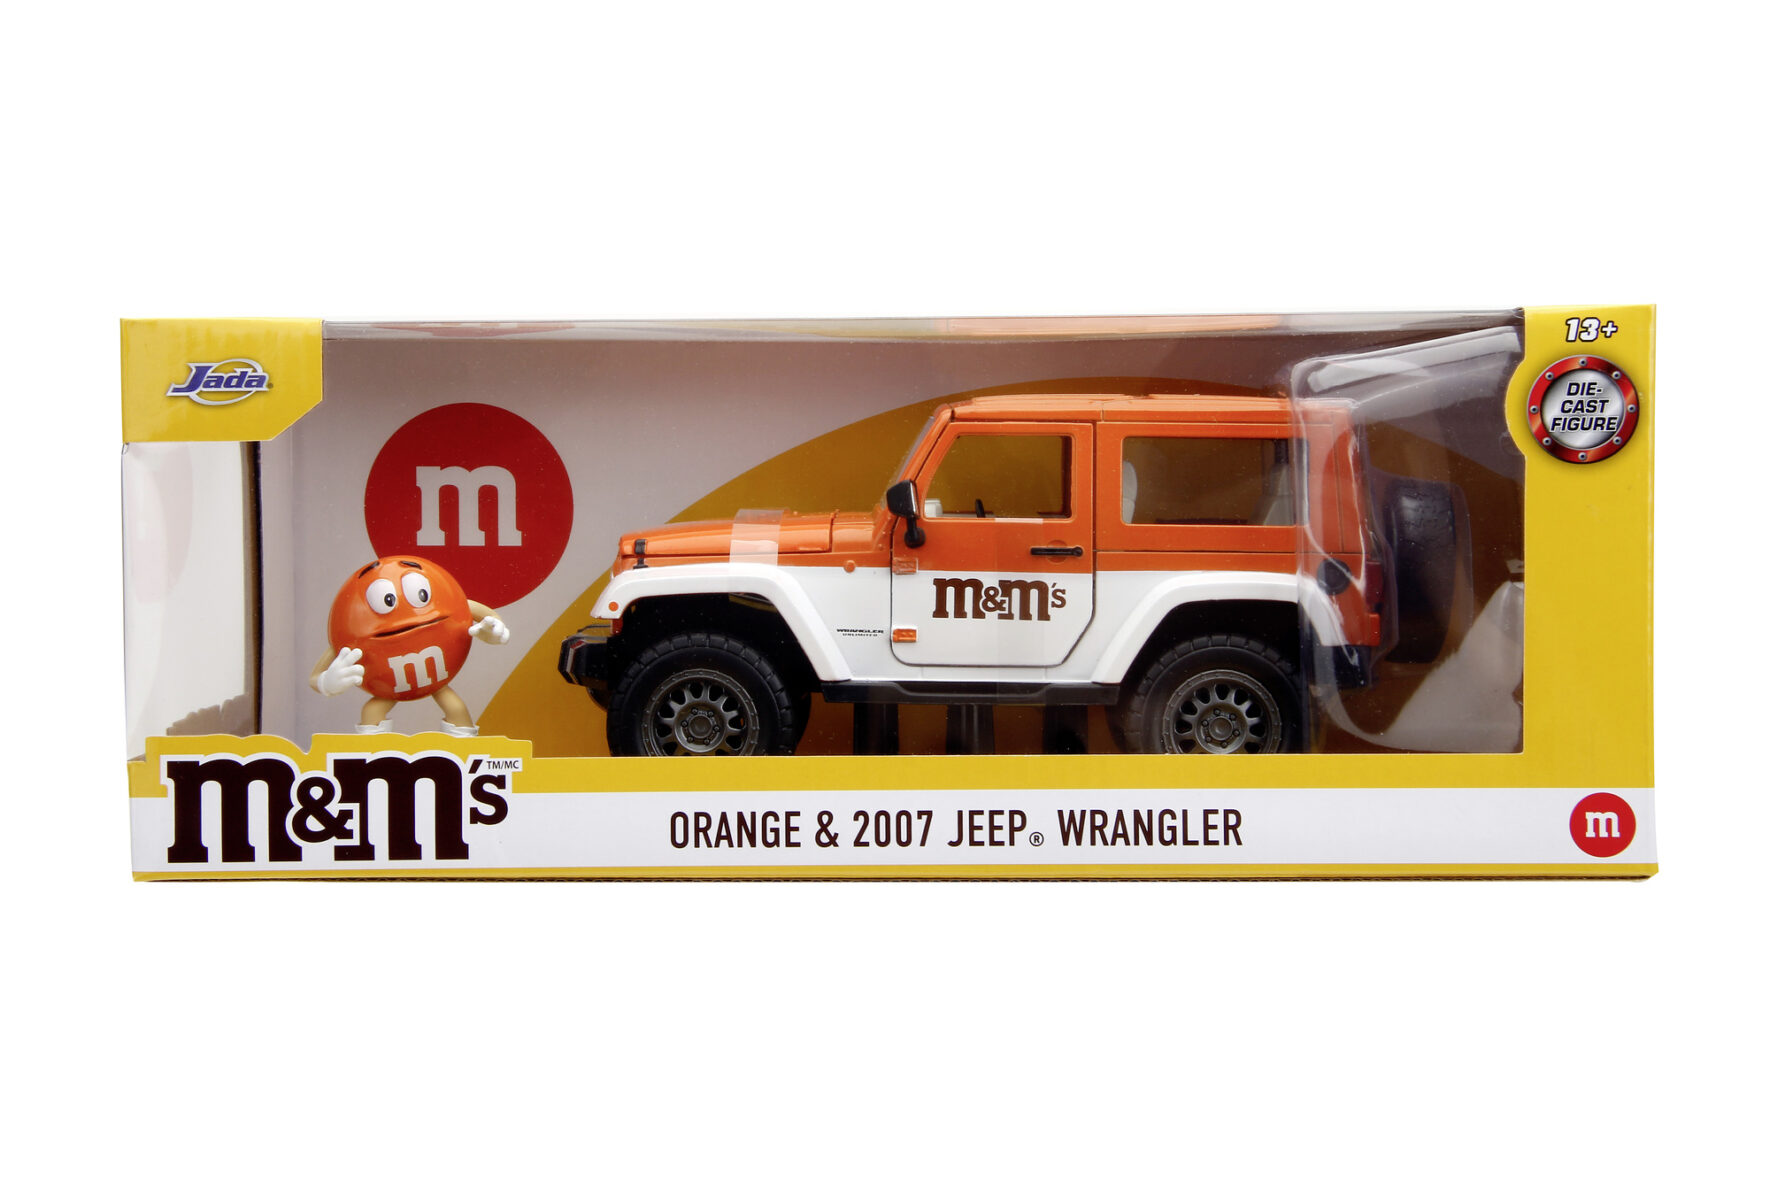 Jada Mms Set Masinuta Metalica Si Figurina Orange Si Jeep Wrangler Scara 1:24